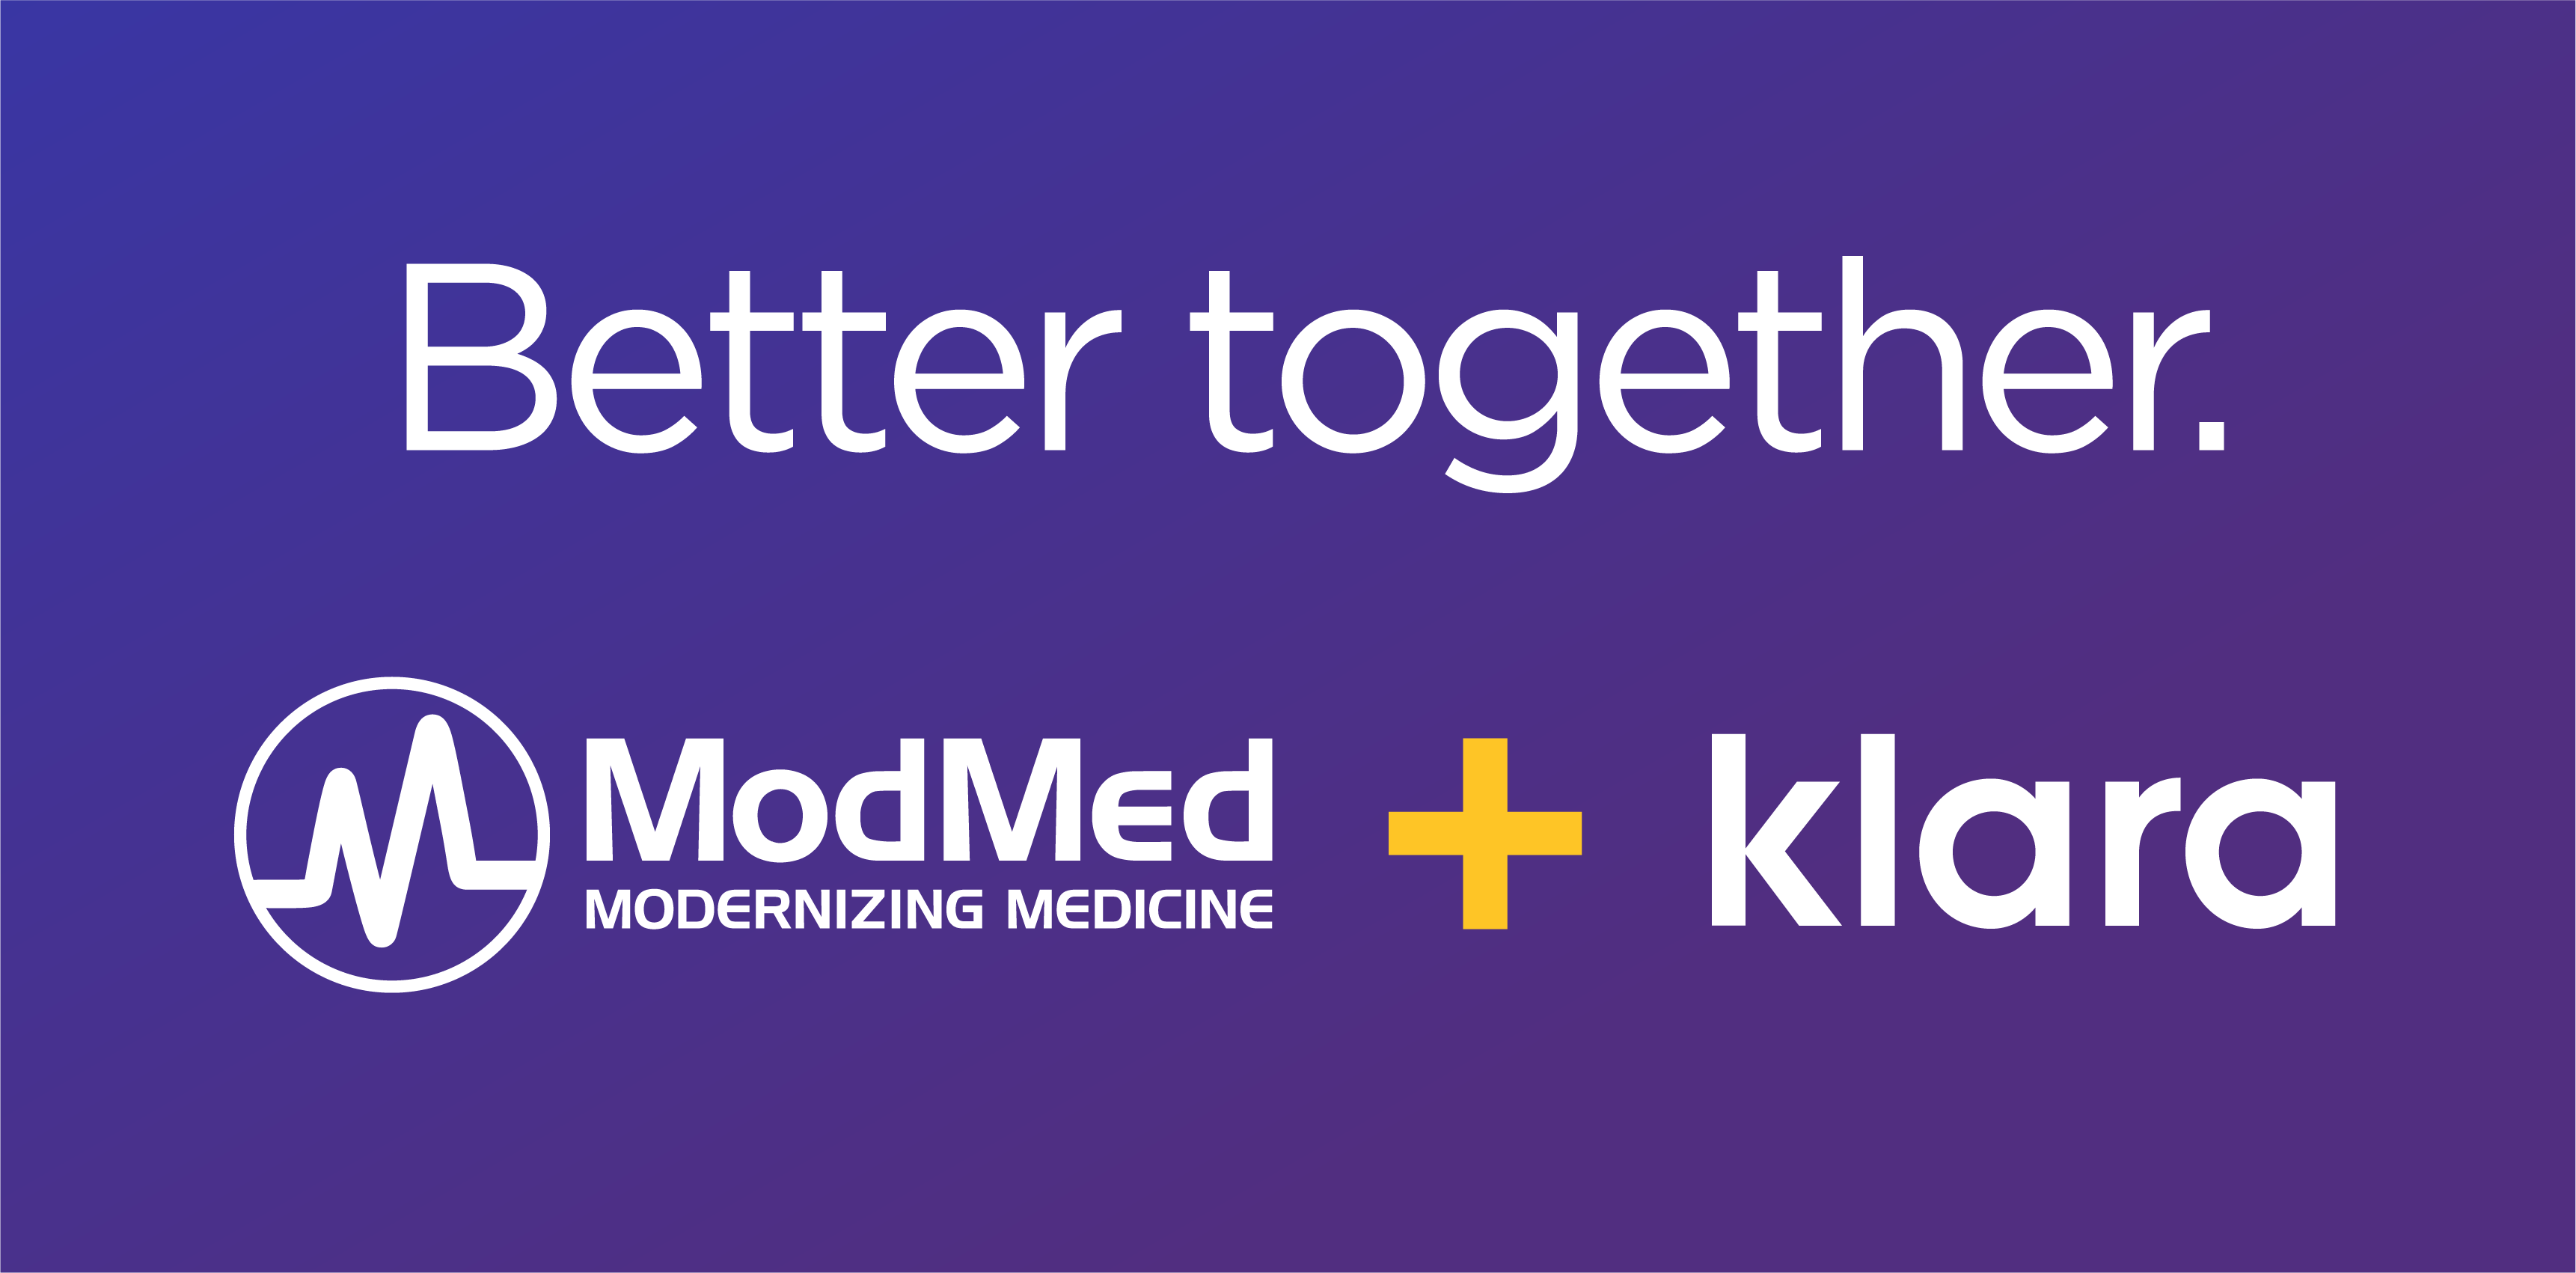 ModMed® Acquires Maker of the Klara® Practice & Patient Collaboration Platform